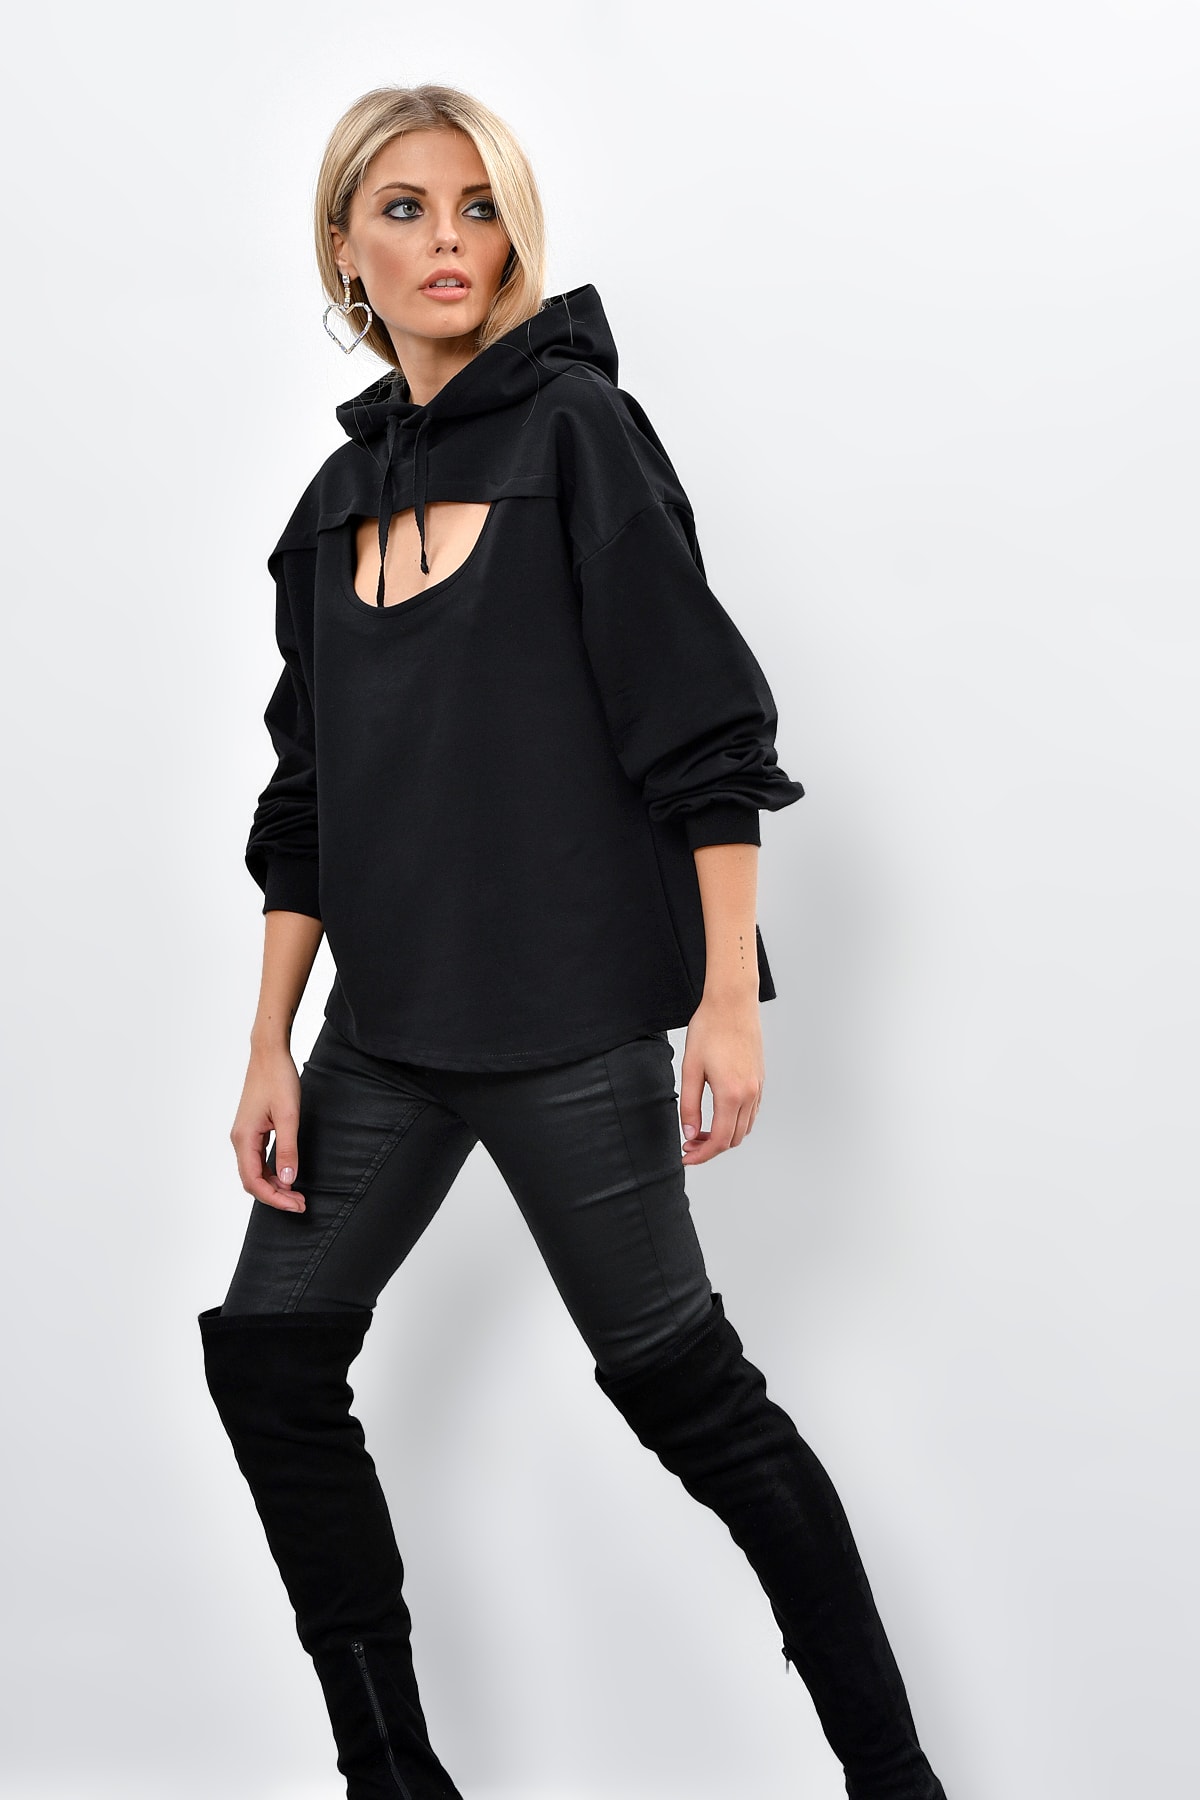 Cool & Sexy Women's Black Hooded Sweatshirt with Front Window Yi1669